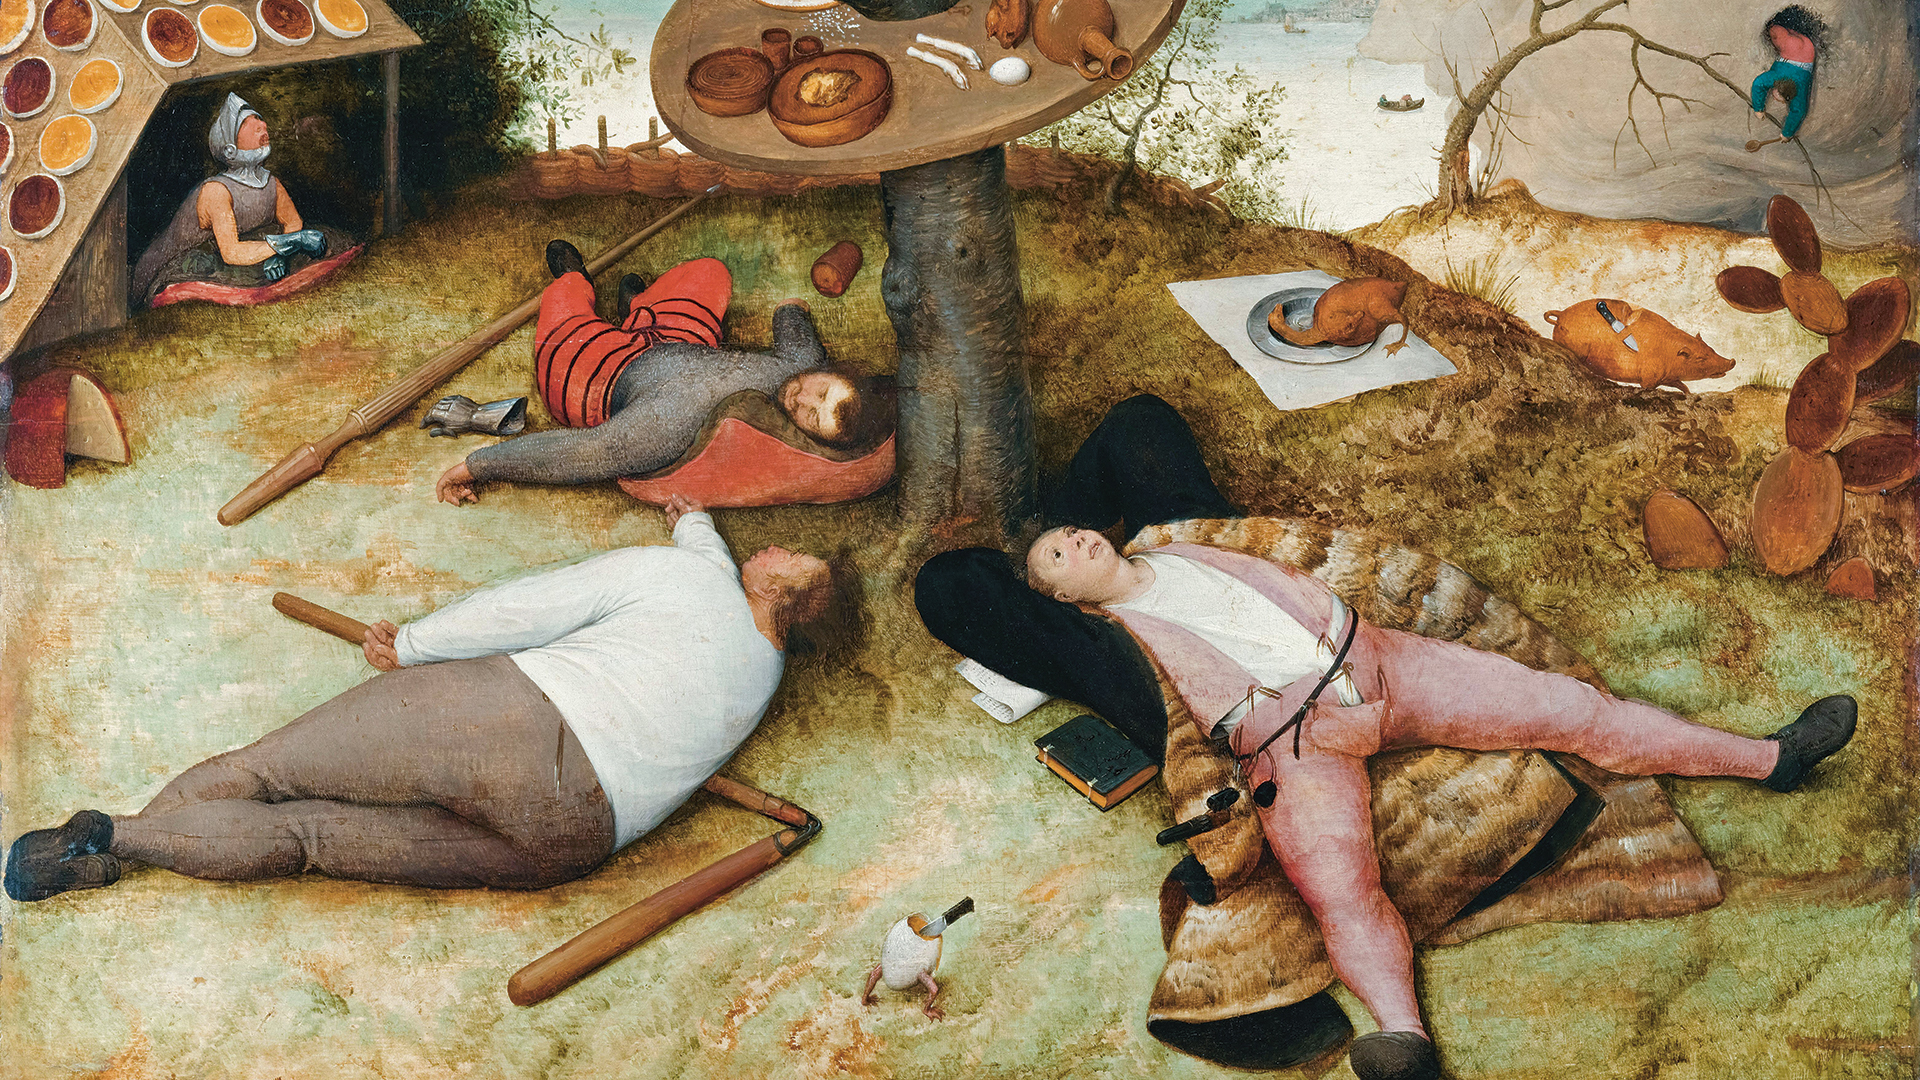 Pieter Bruegel the Elder’s 1567 painting The Land of Cockaigne